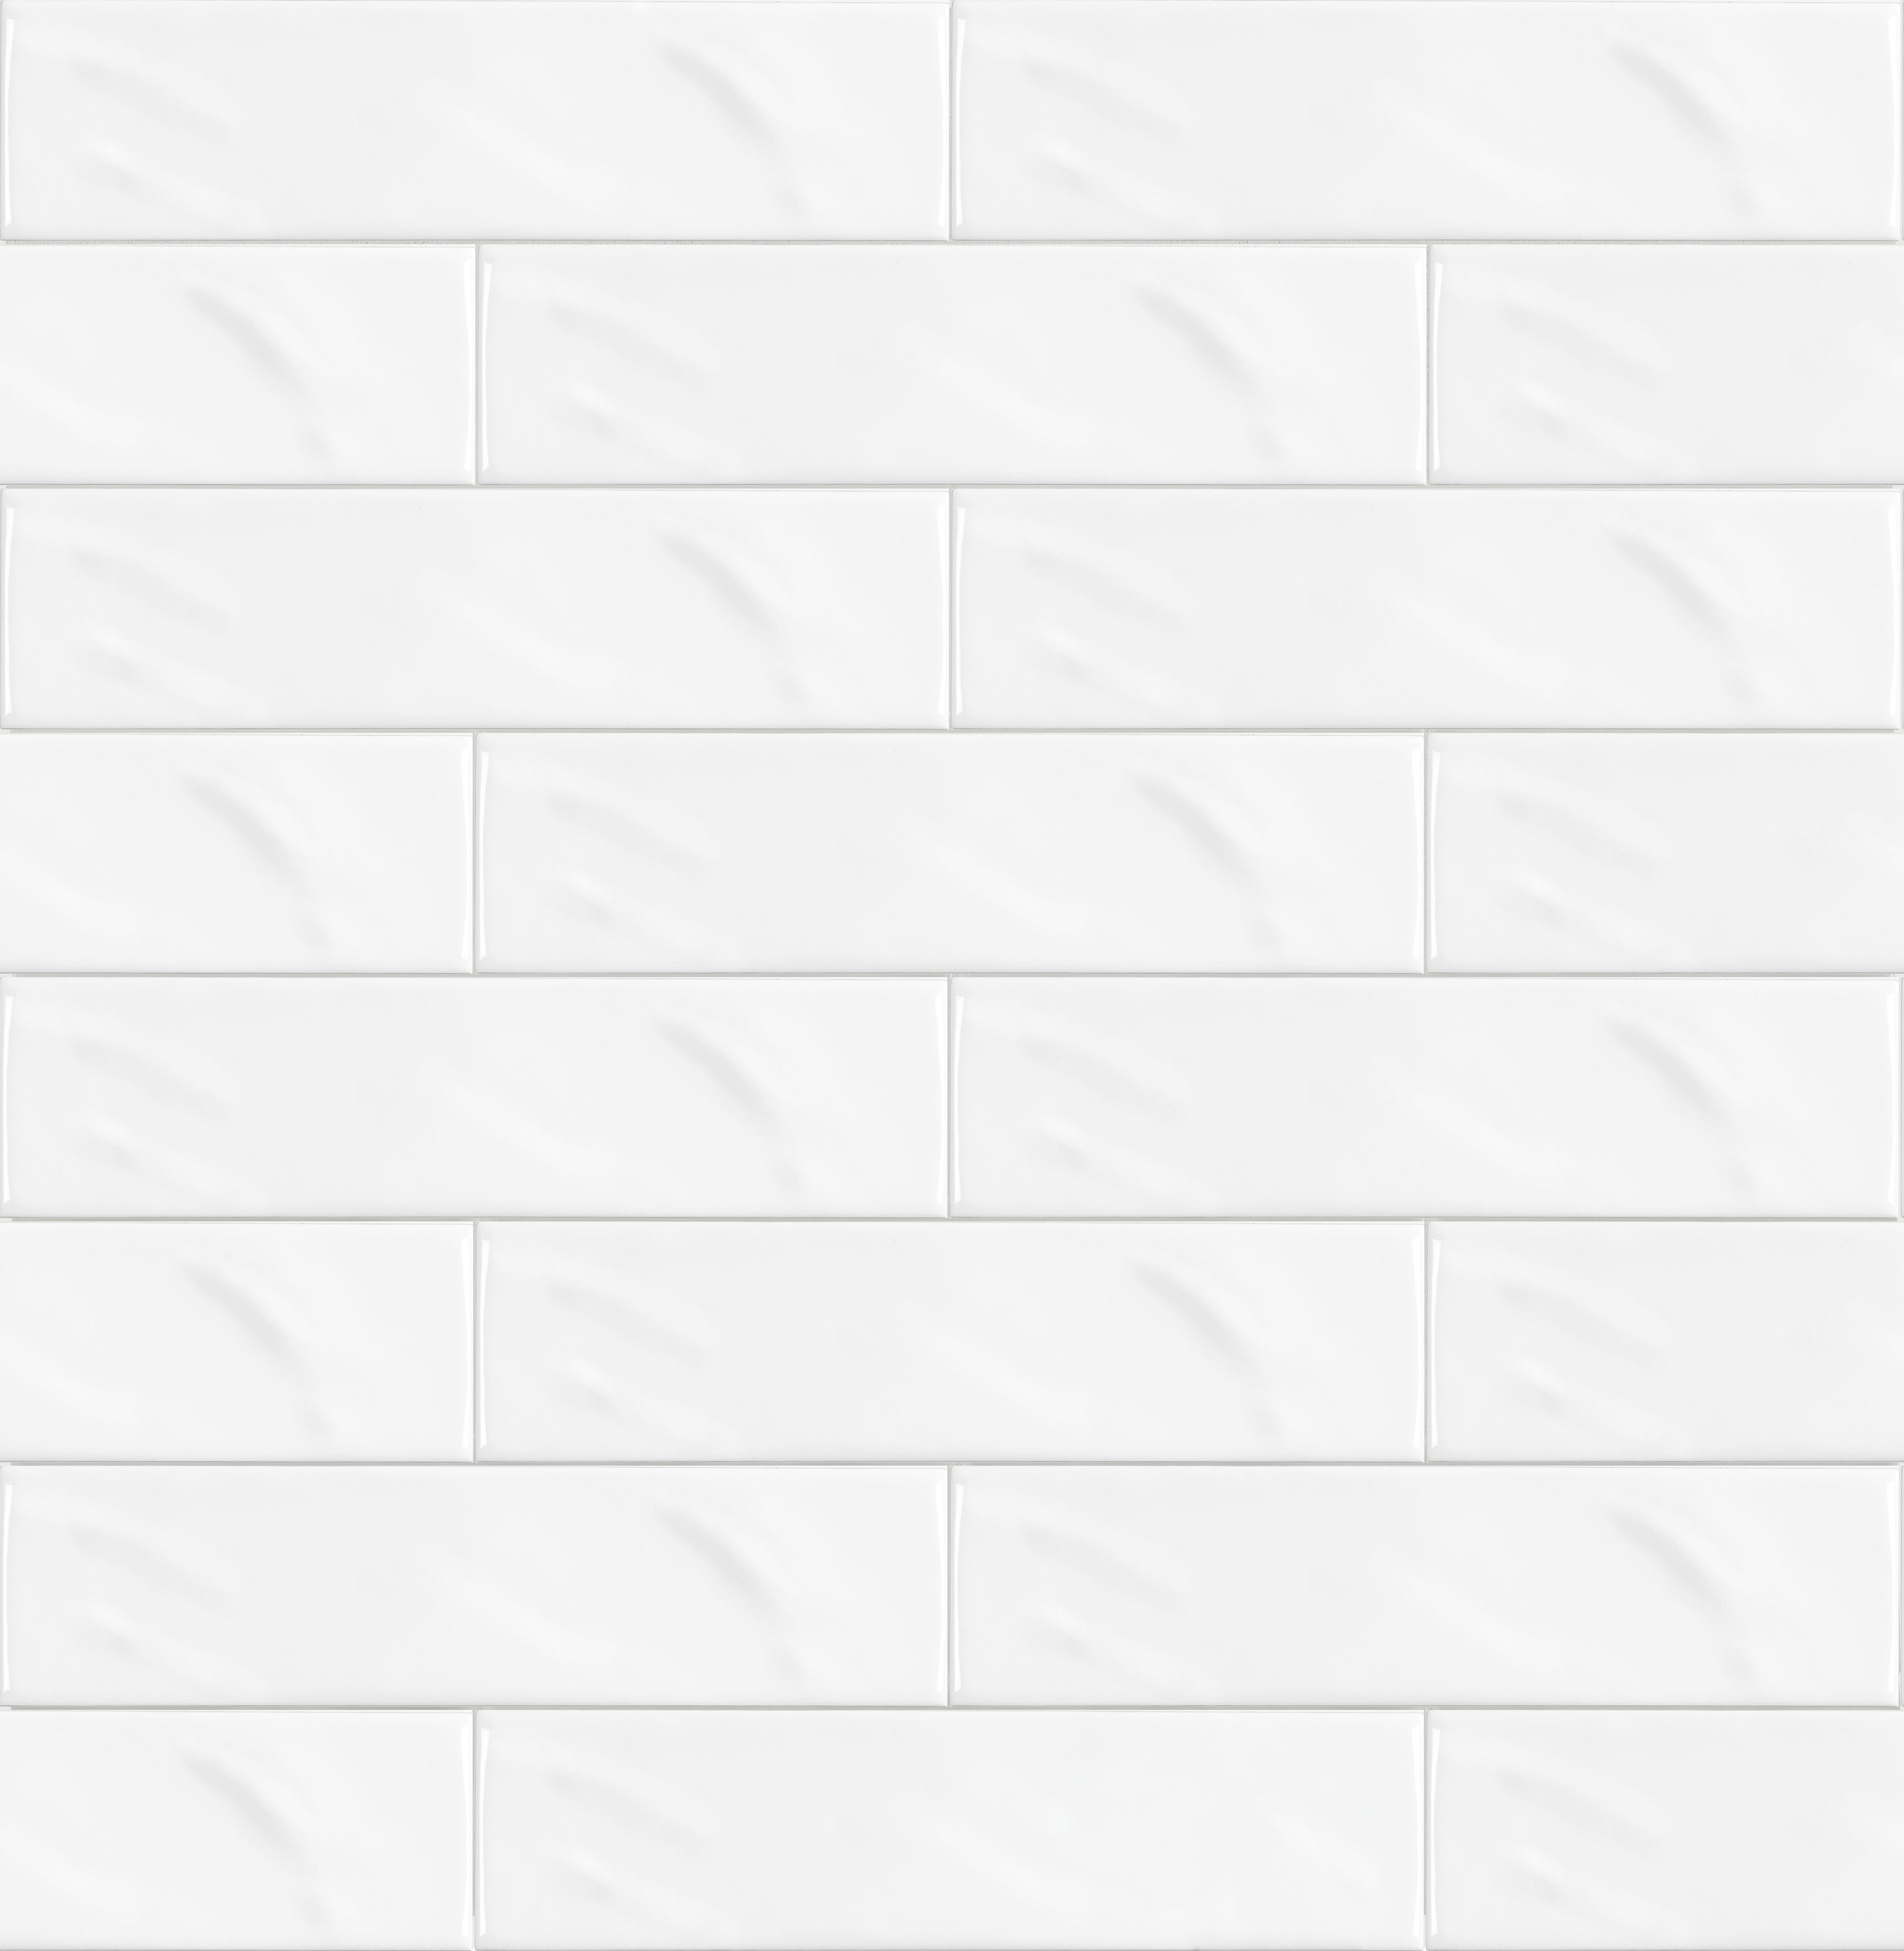 White Kitchen Brick Design Tiles for Wall Decor  Sale · Morton Stones  CHICAGO STYLE BRICK VENEERS- PURE WHITE COLOR. Make Your Home Decor Art  With White Brick Tiles. FREE SHIPPING!